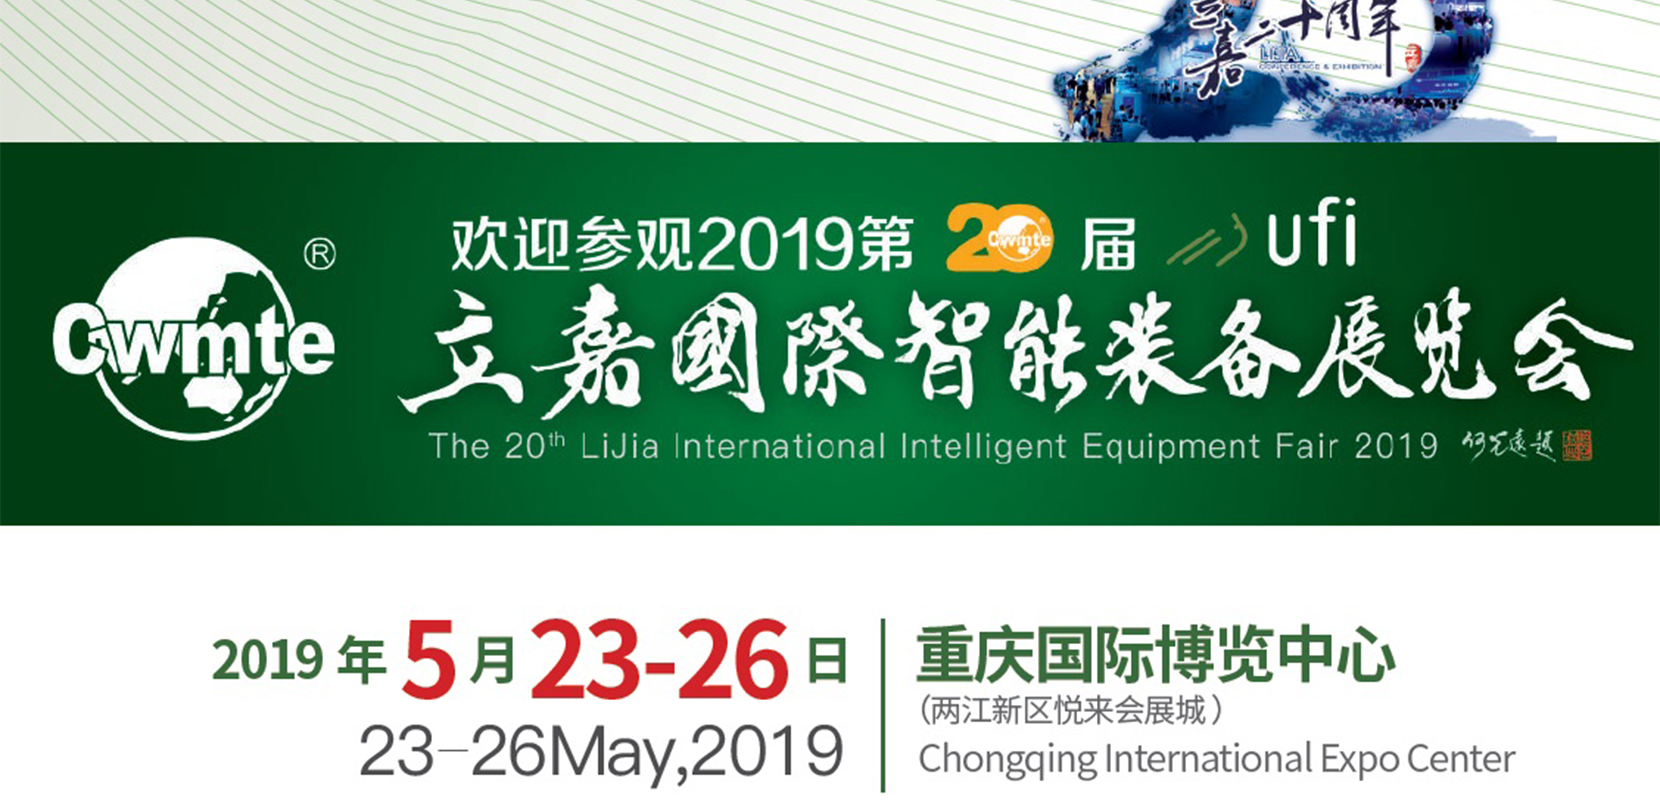 2019.5.23 Welcome to Our Fair In Chongqing 欢迎参观我司重庆立嘉展